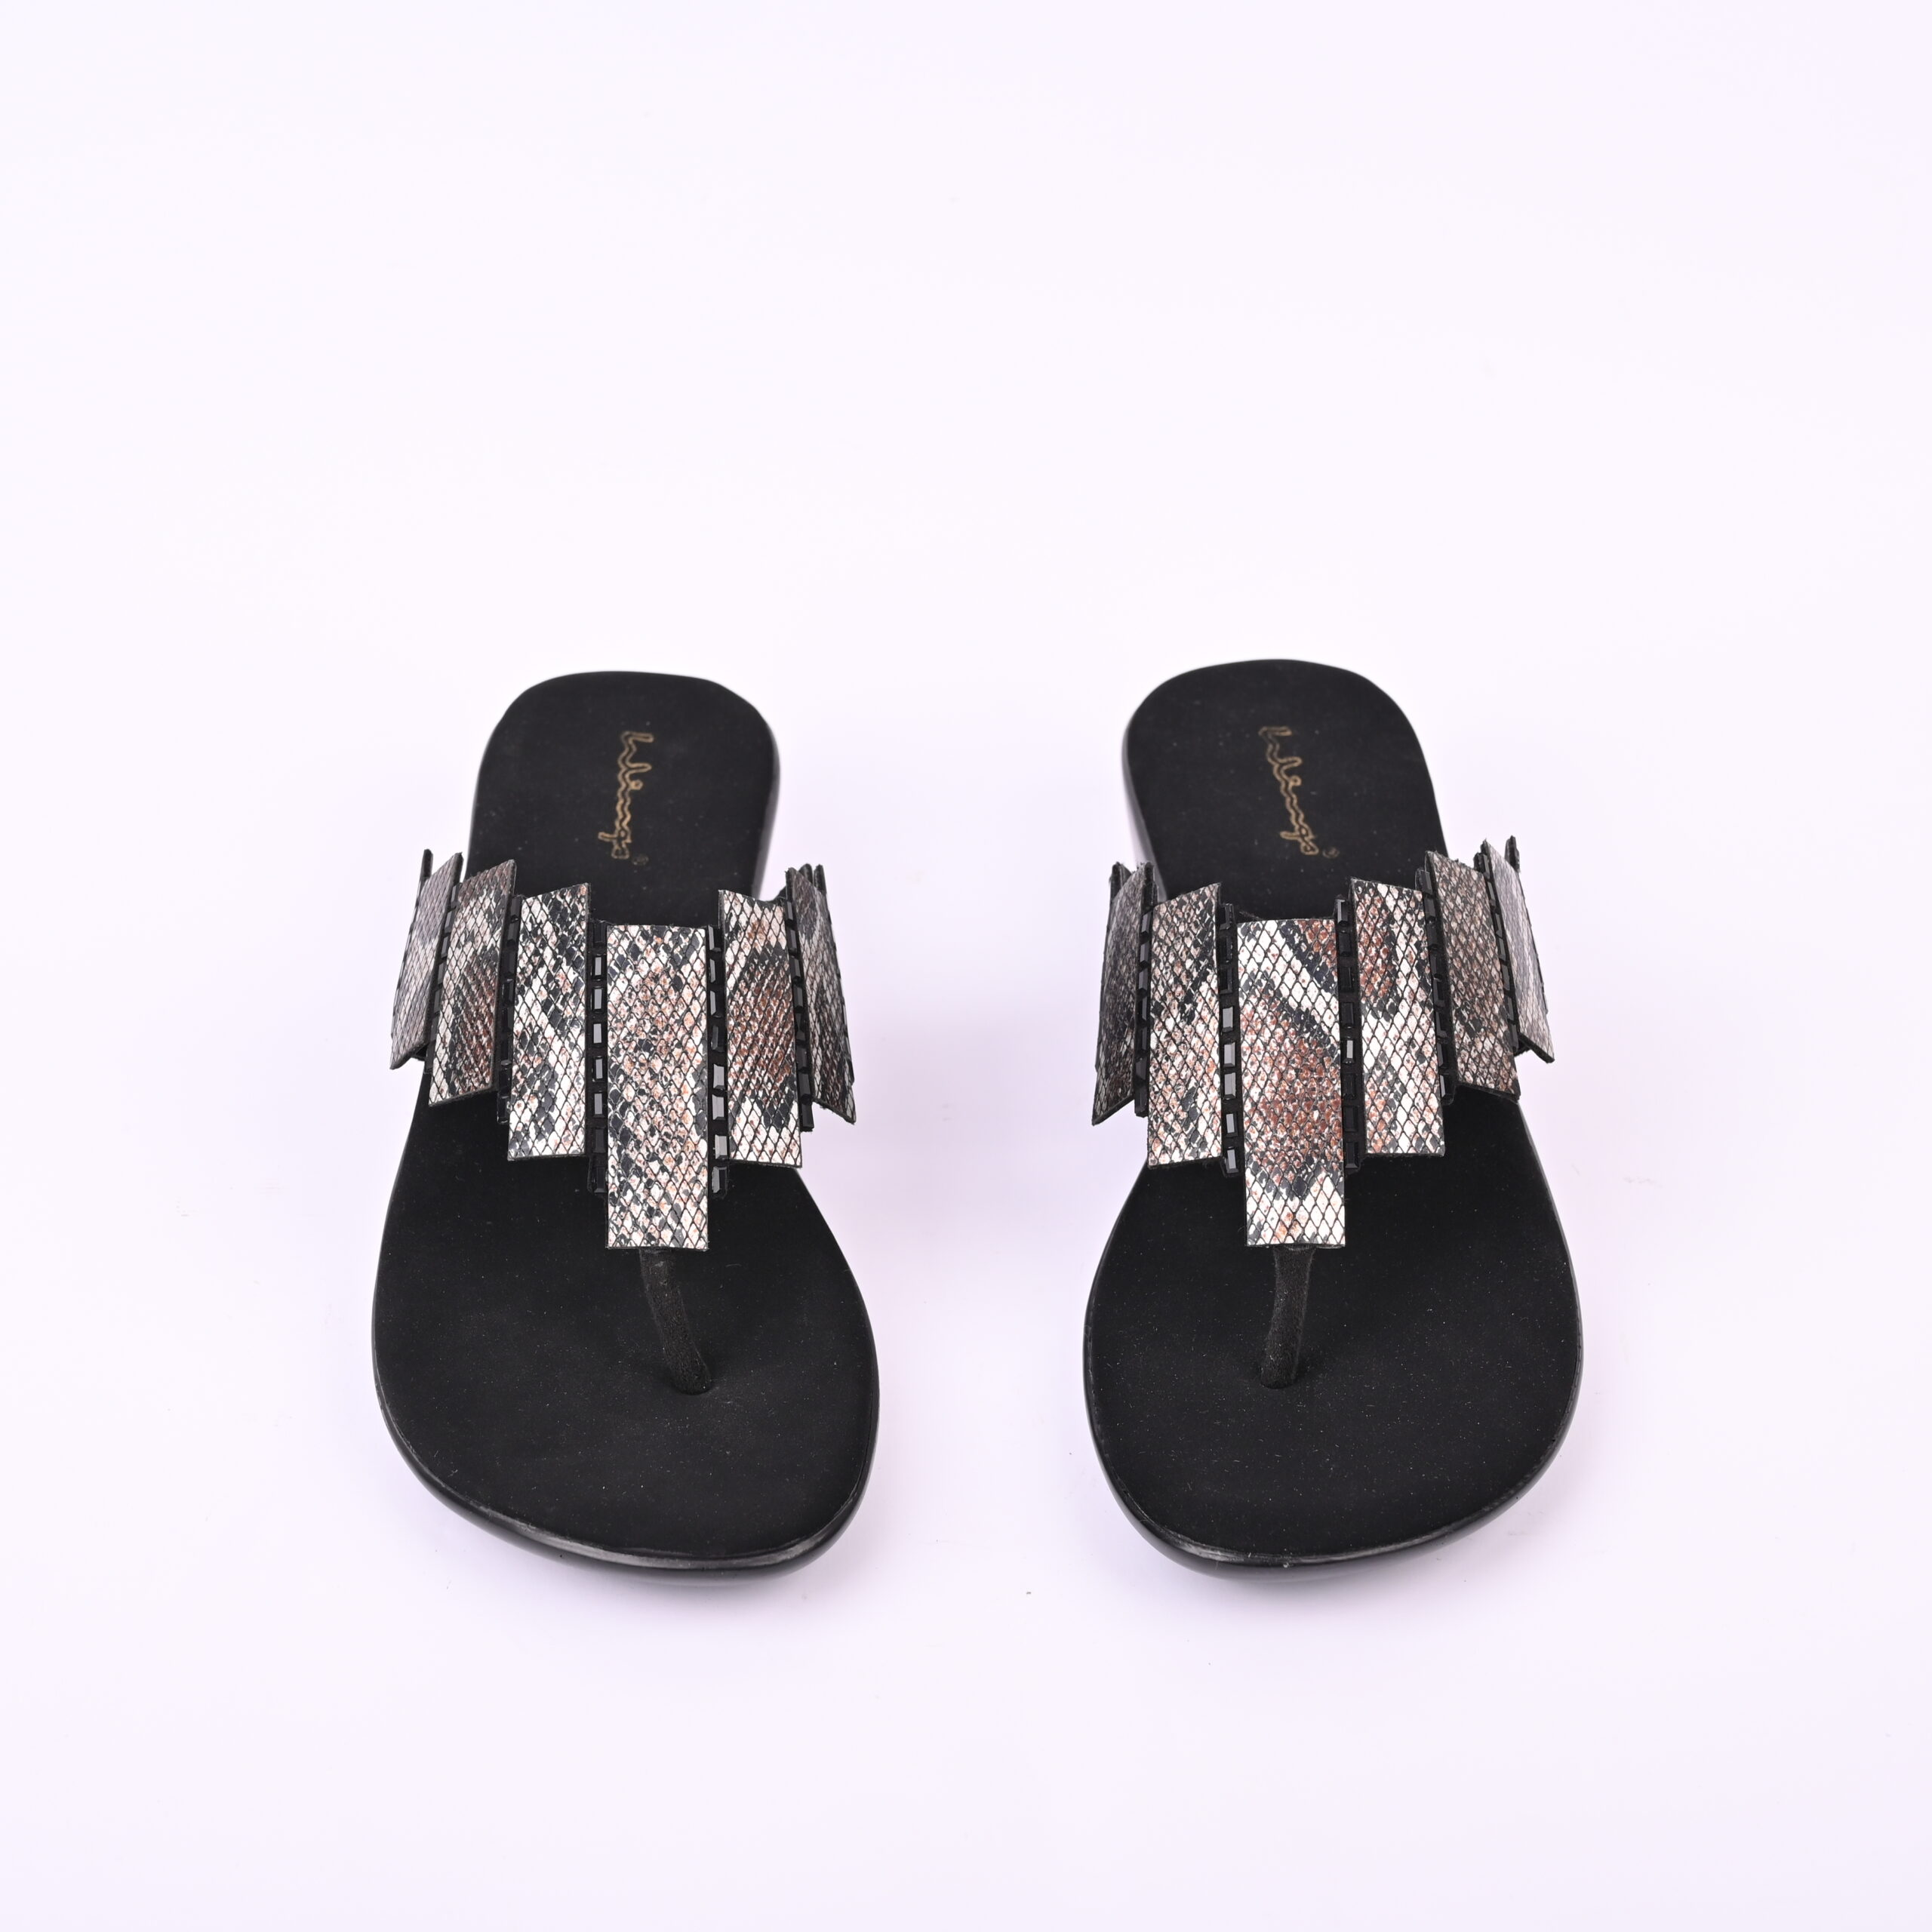 Elite by Corkys Leather Sandals Shoes Women's US Size 5.5 European Size 37  - BK | eBay